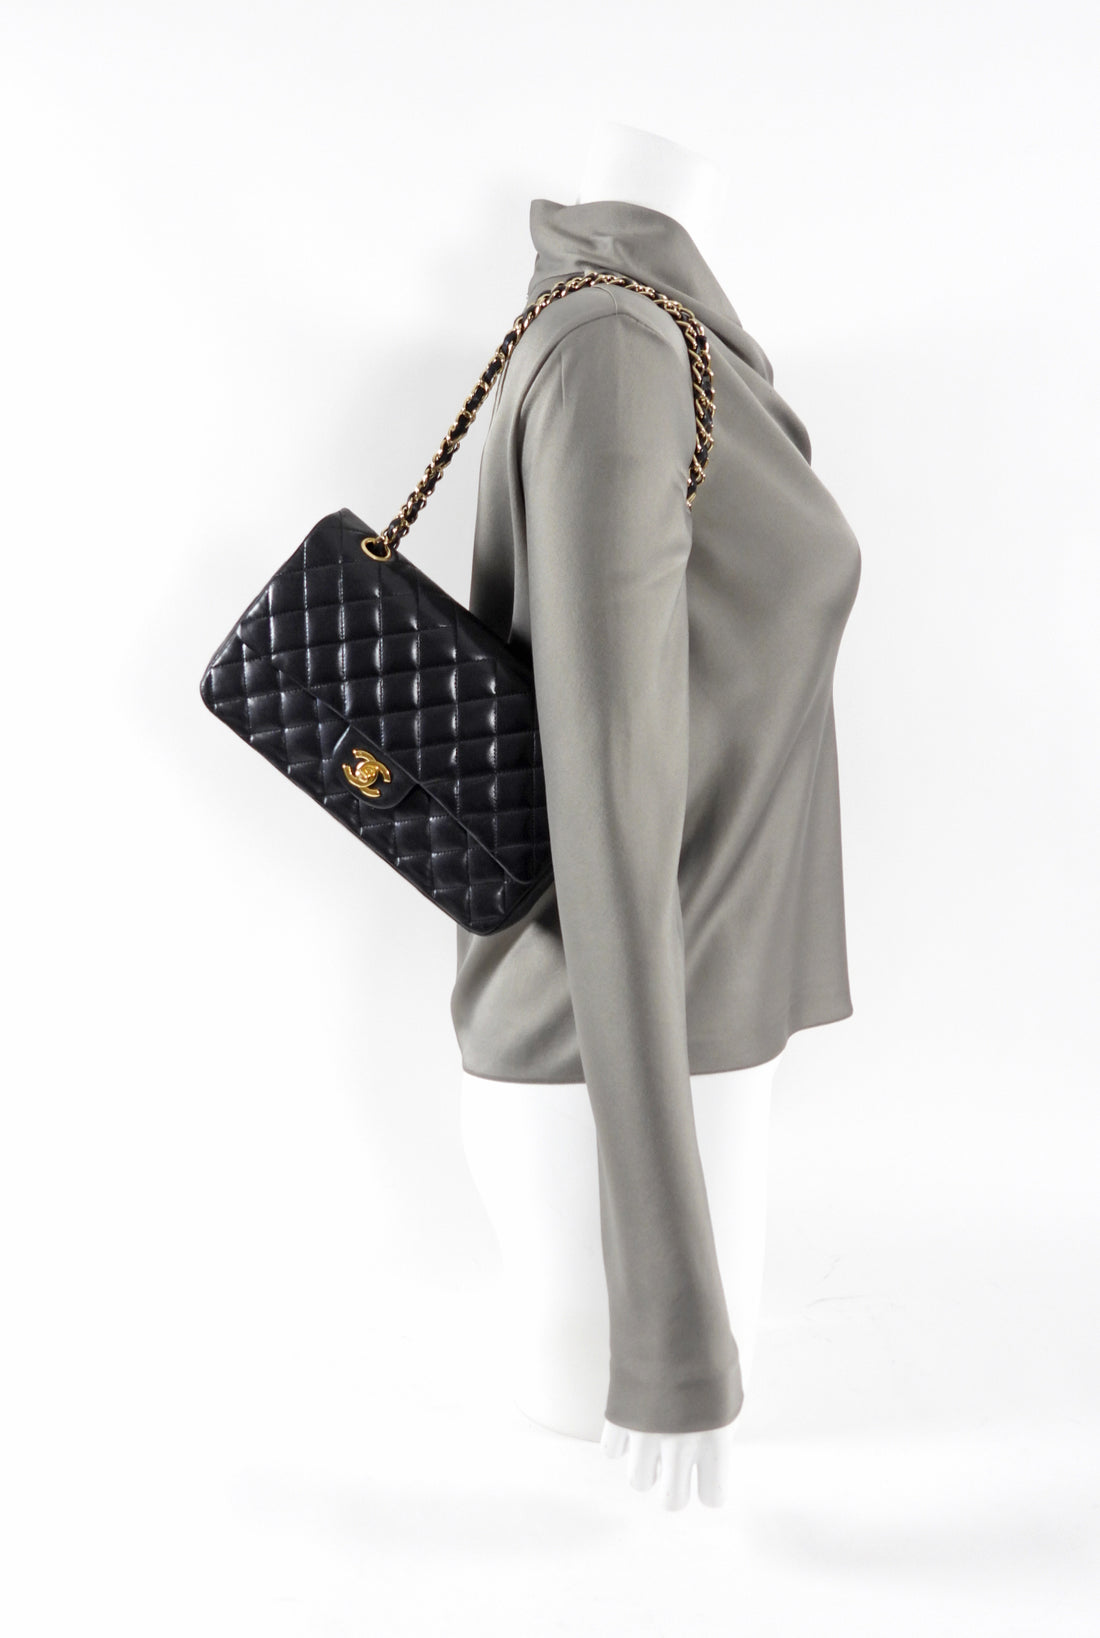 Chanel Black Lambskin Medium Double Classic Flap Bag – I MISS YOU